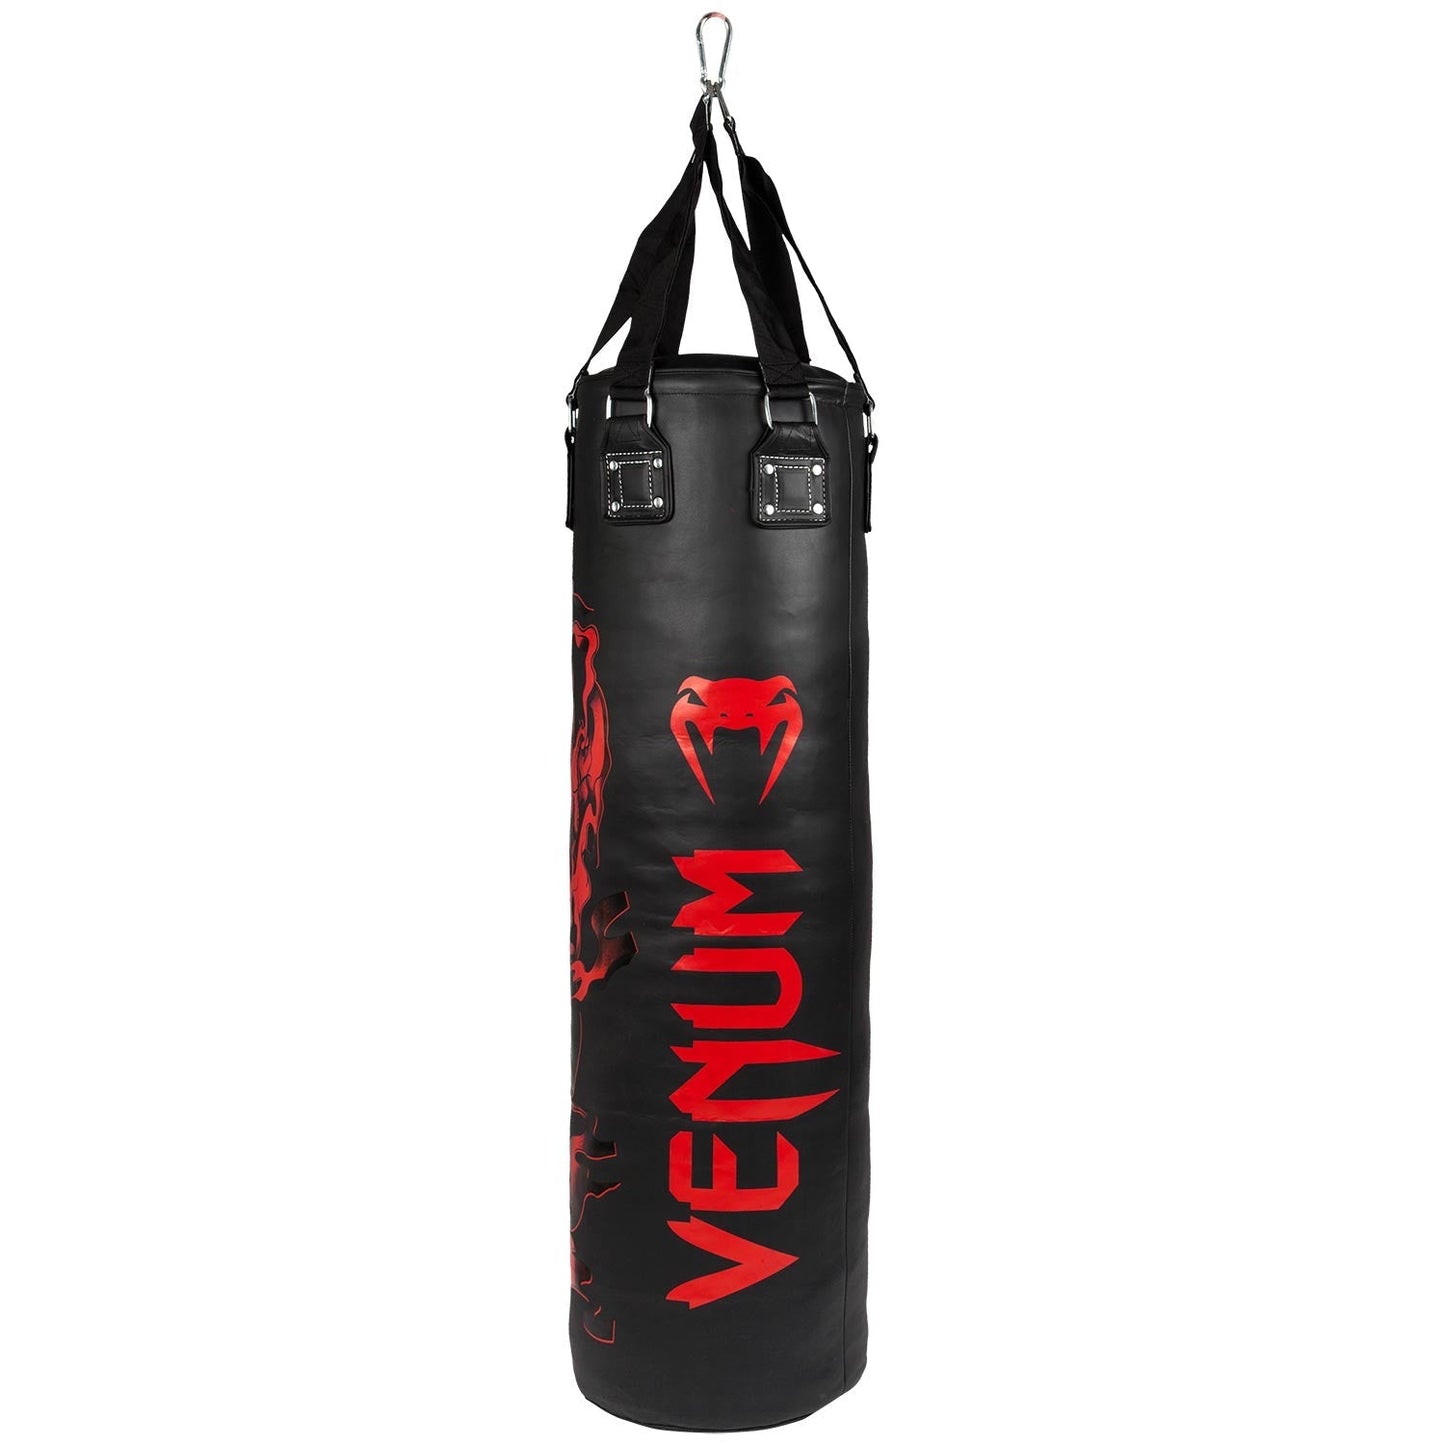 Venum Dragon's Flight Heavy Bag - Black/Red - 130 cm